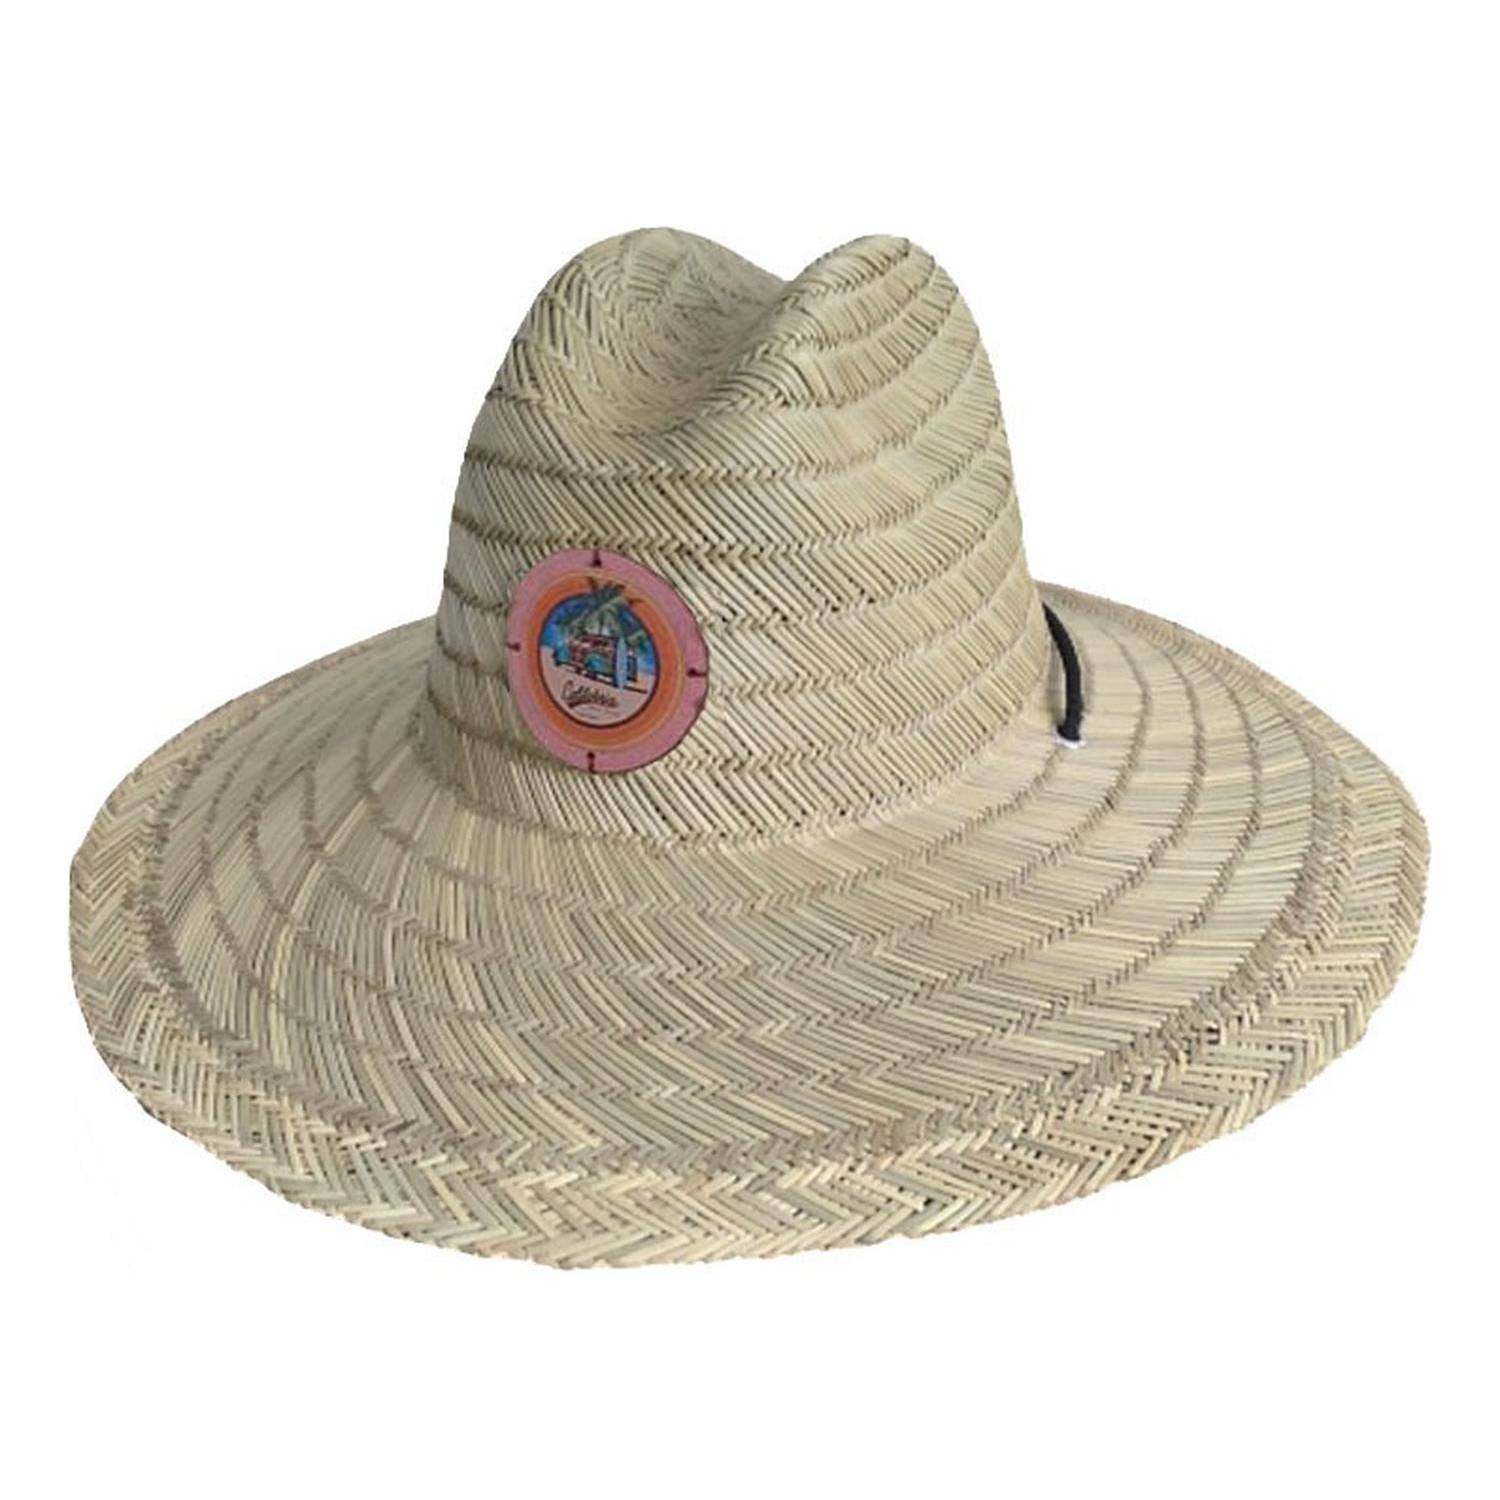 Sombrero Tipo Quiksilver Paja Artesanal Playa Hombre Mujer - Beige